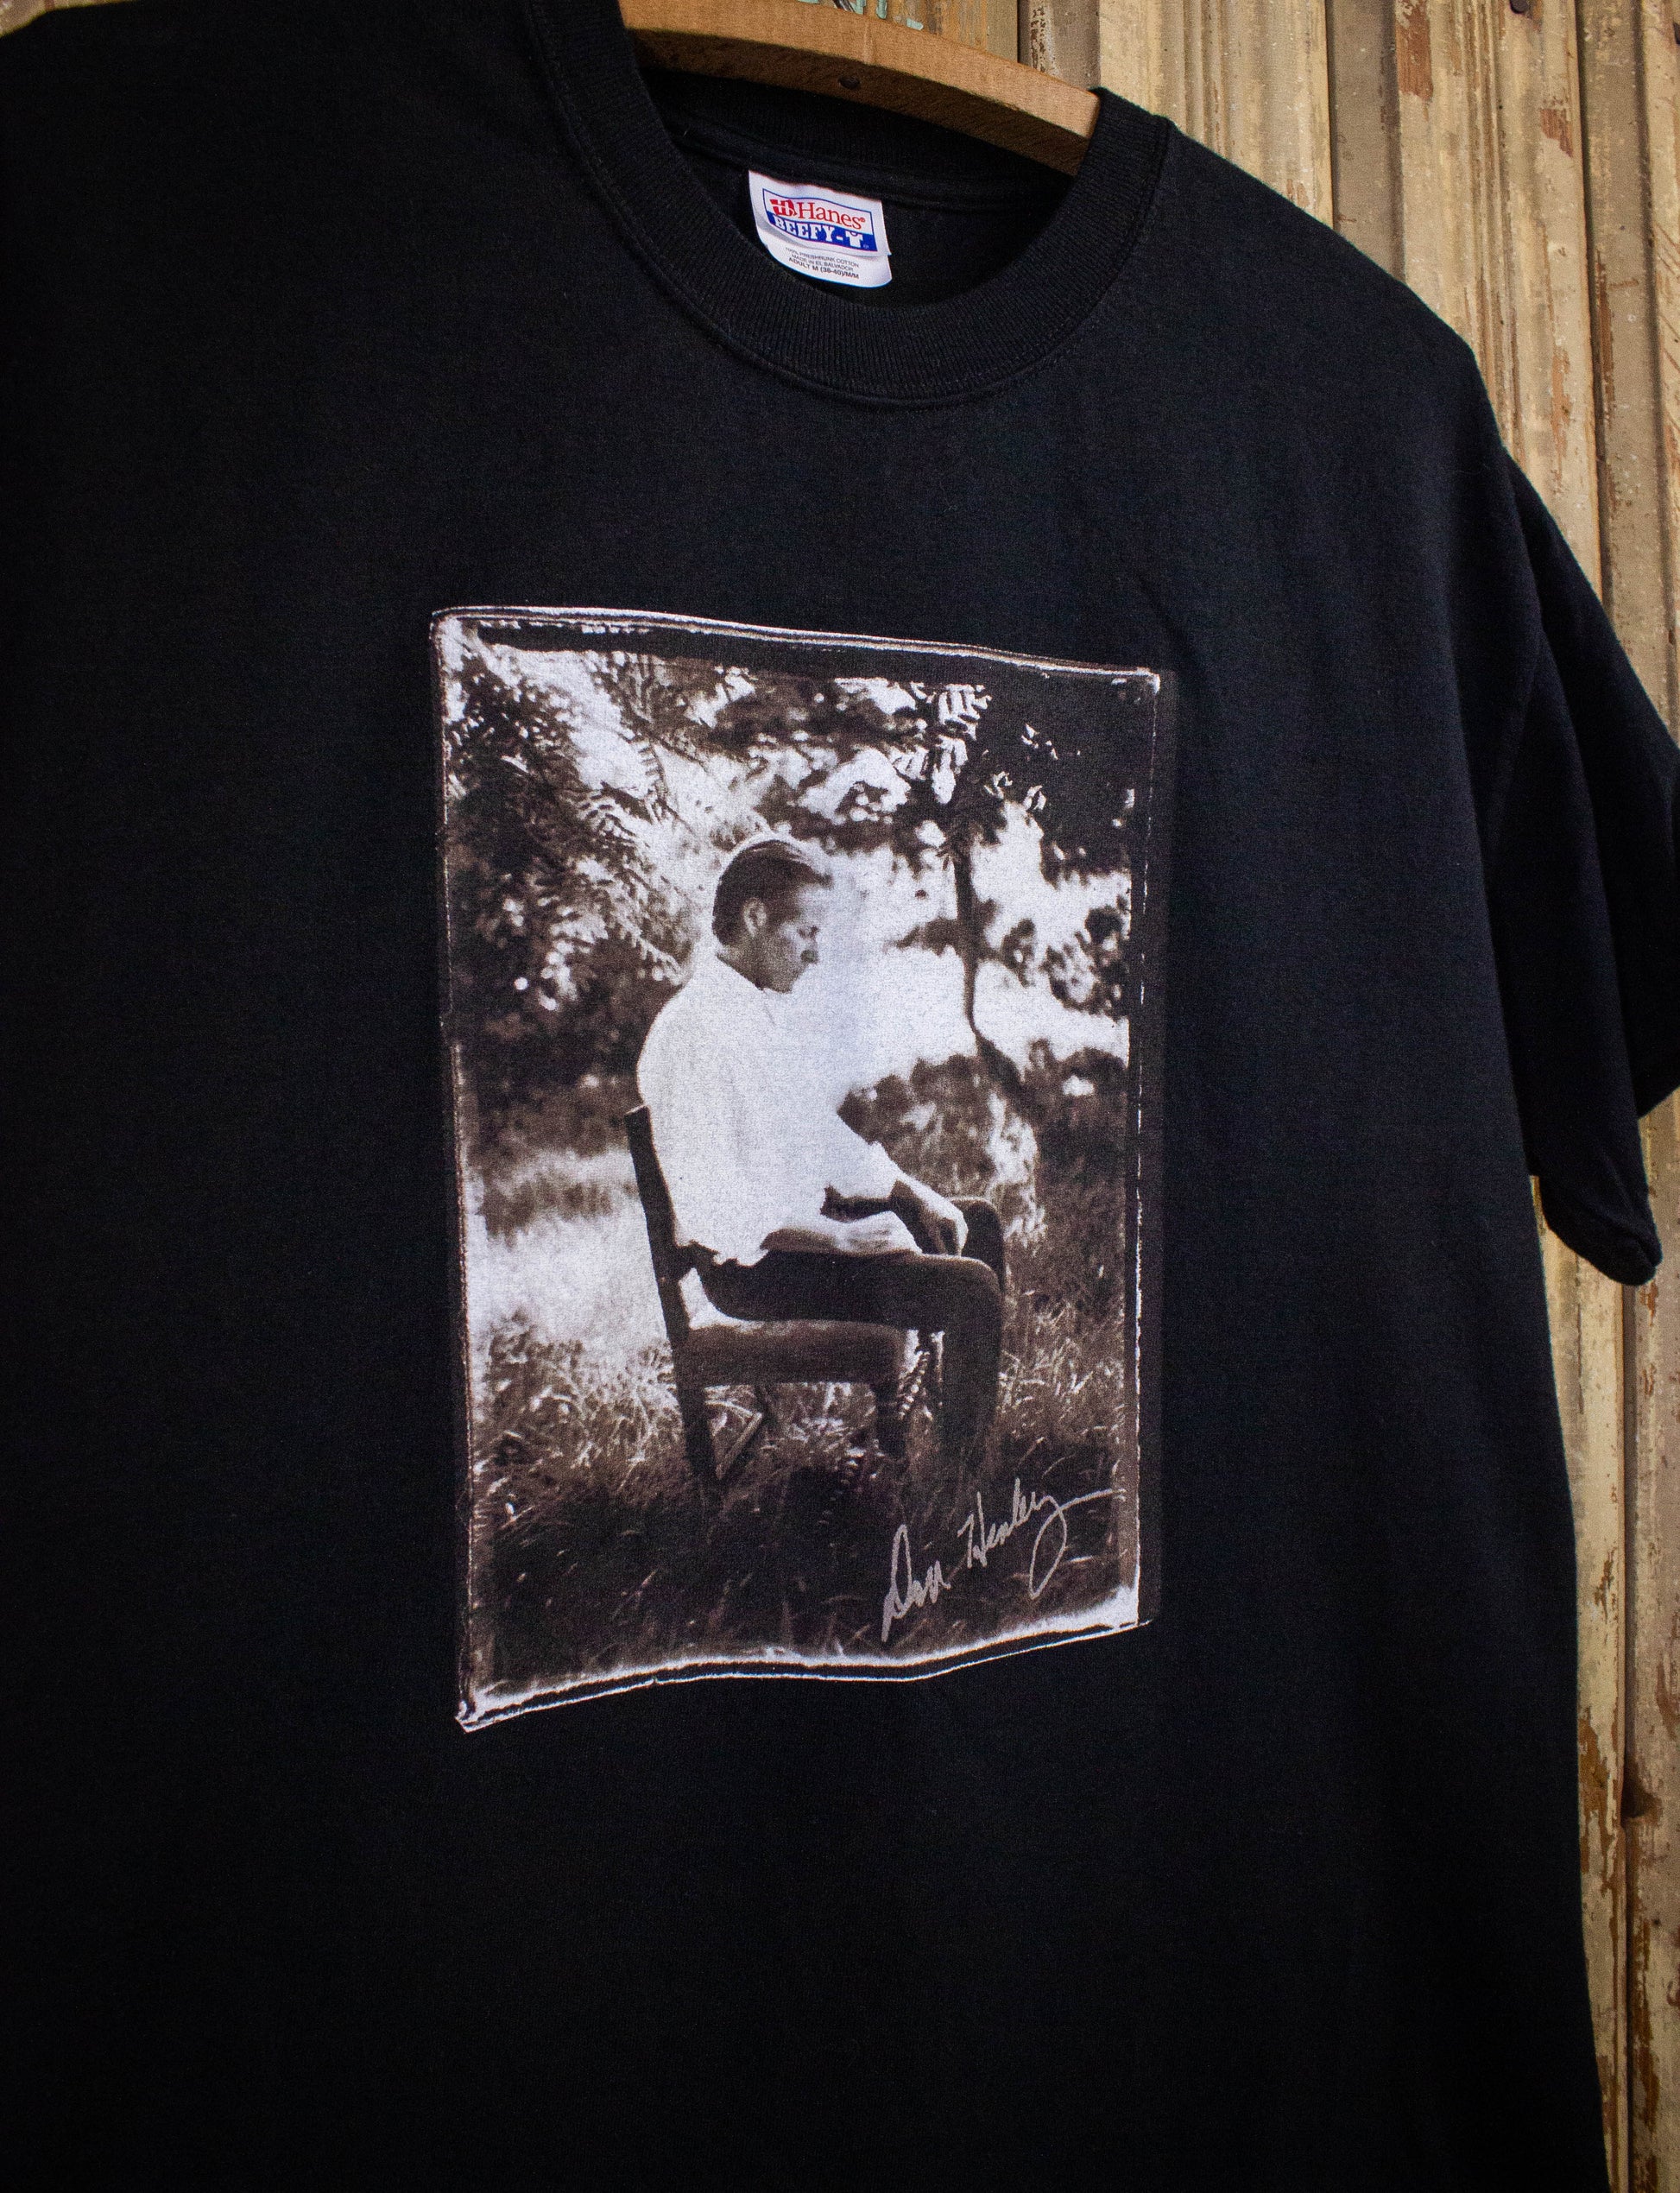 Vintage Don Henley Tour Concert T Shirt 2004 Black Medium